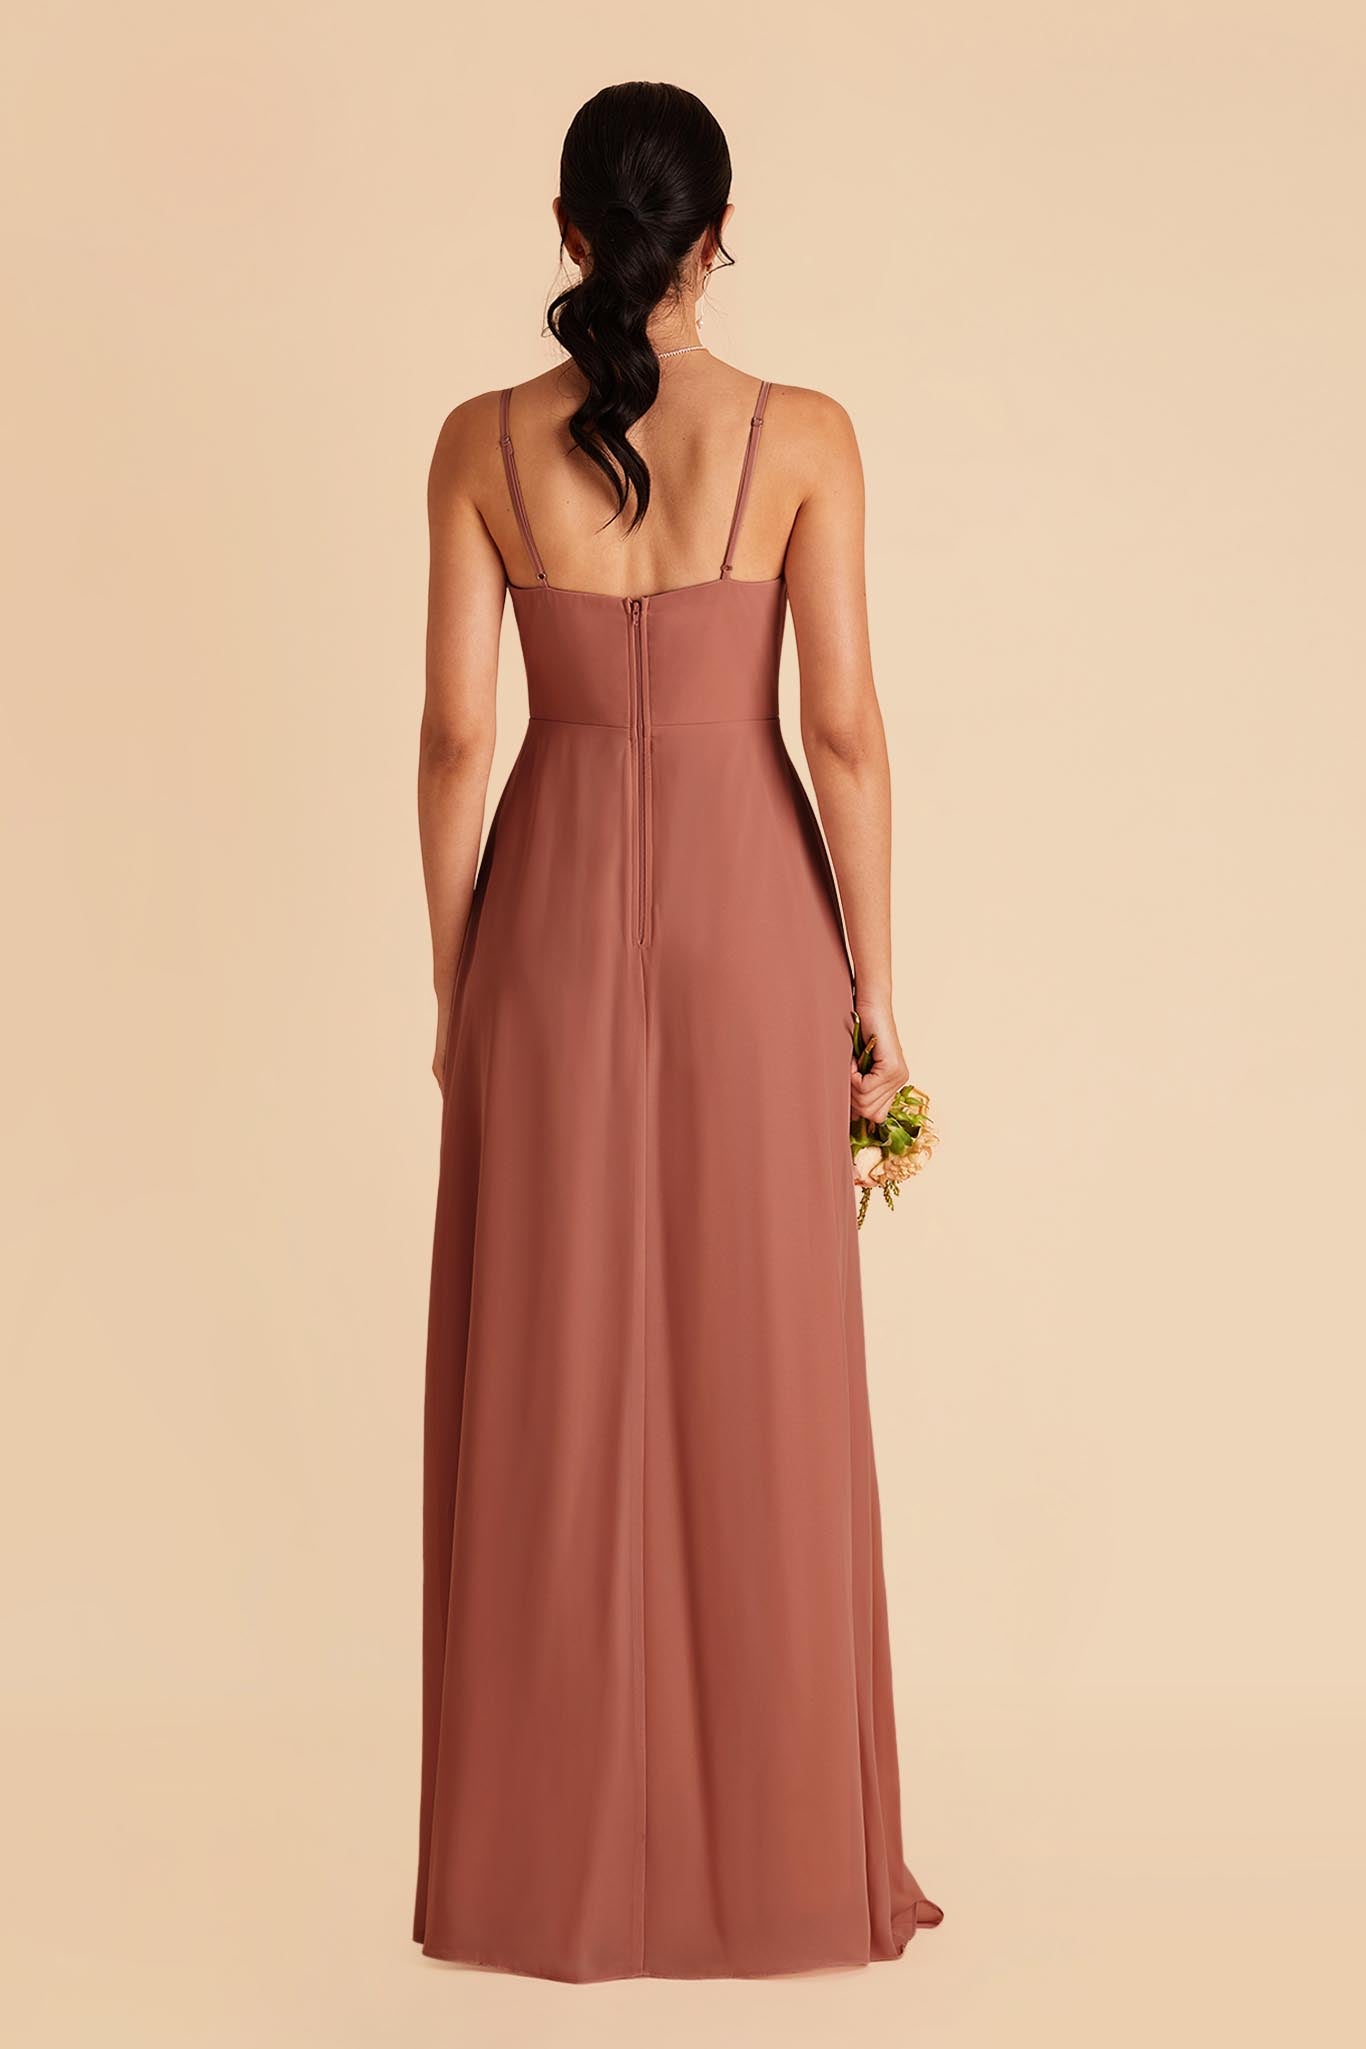 Desert Rose Amy Chiffon Dress by Birdy Grey